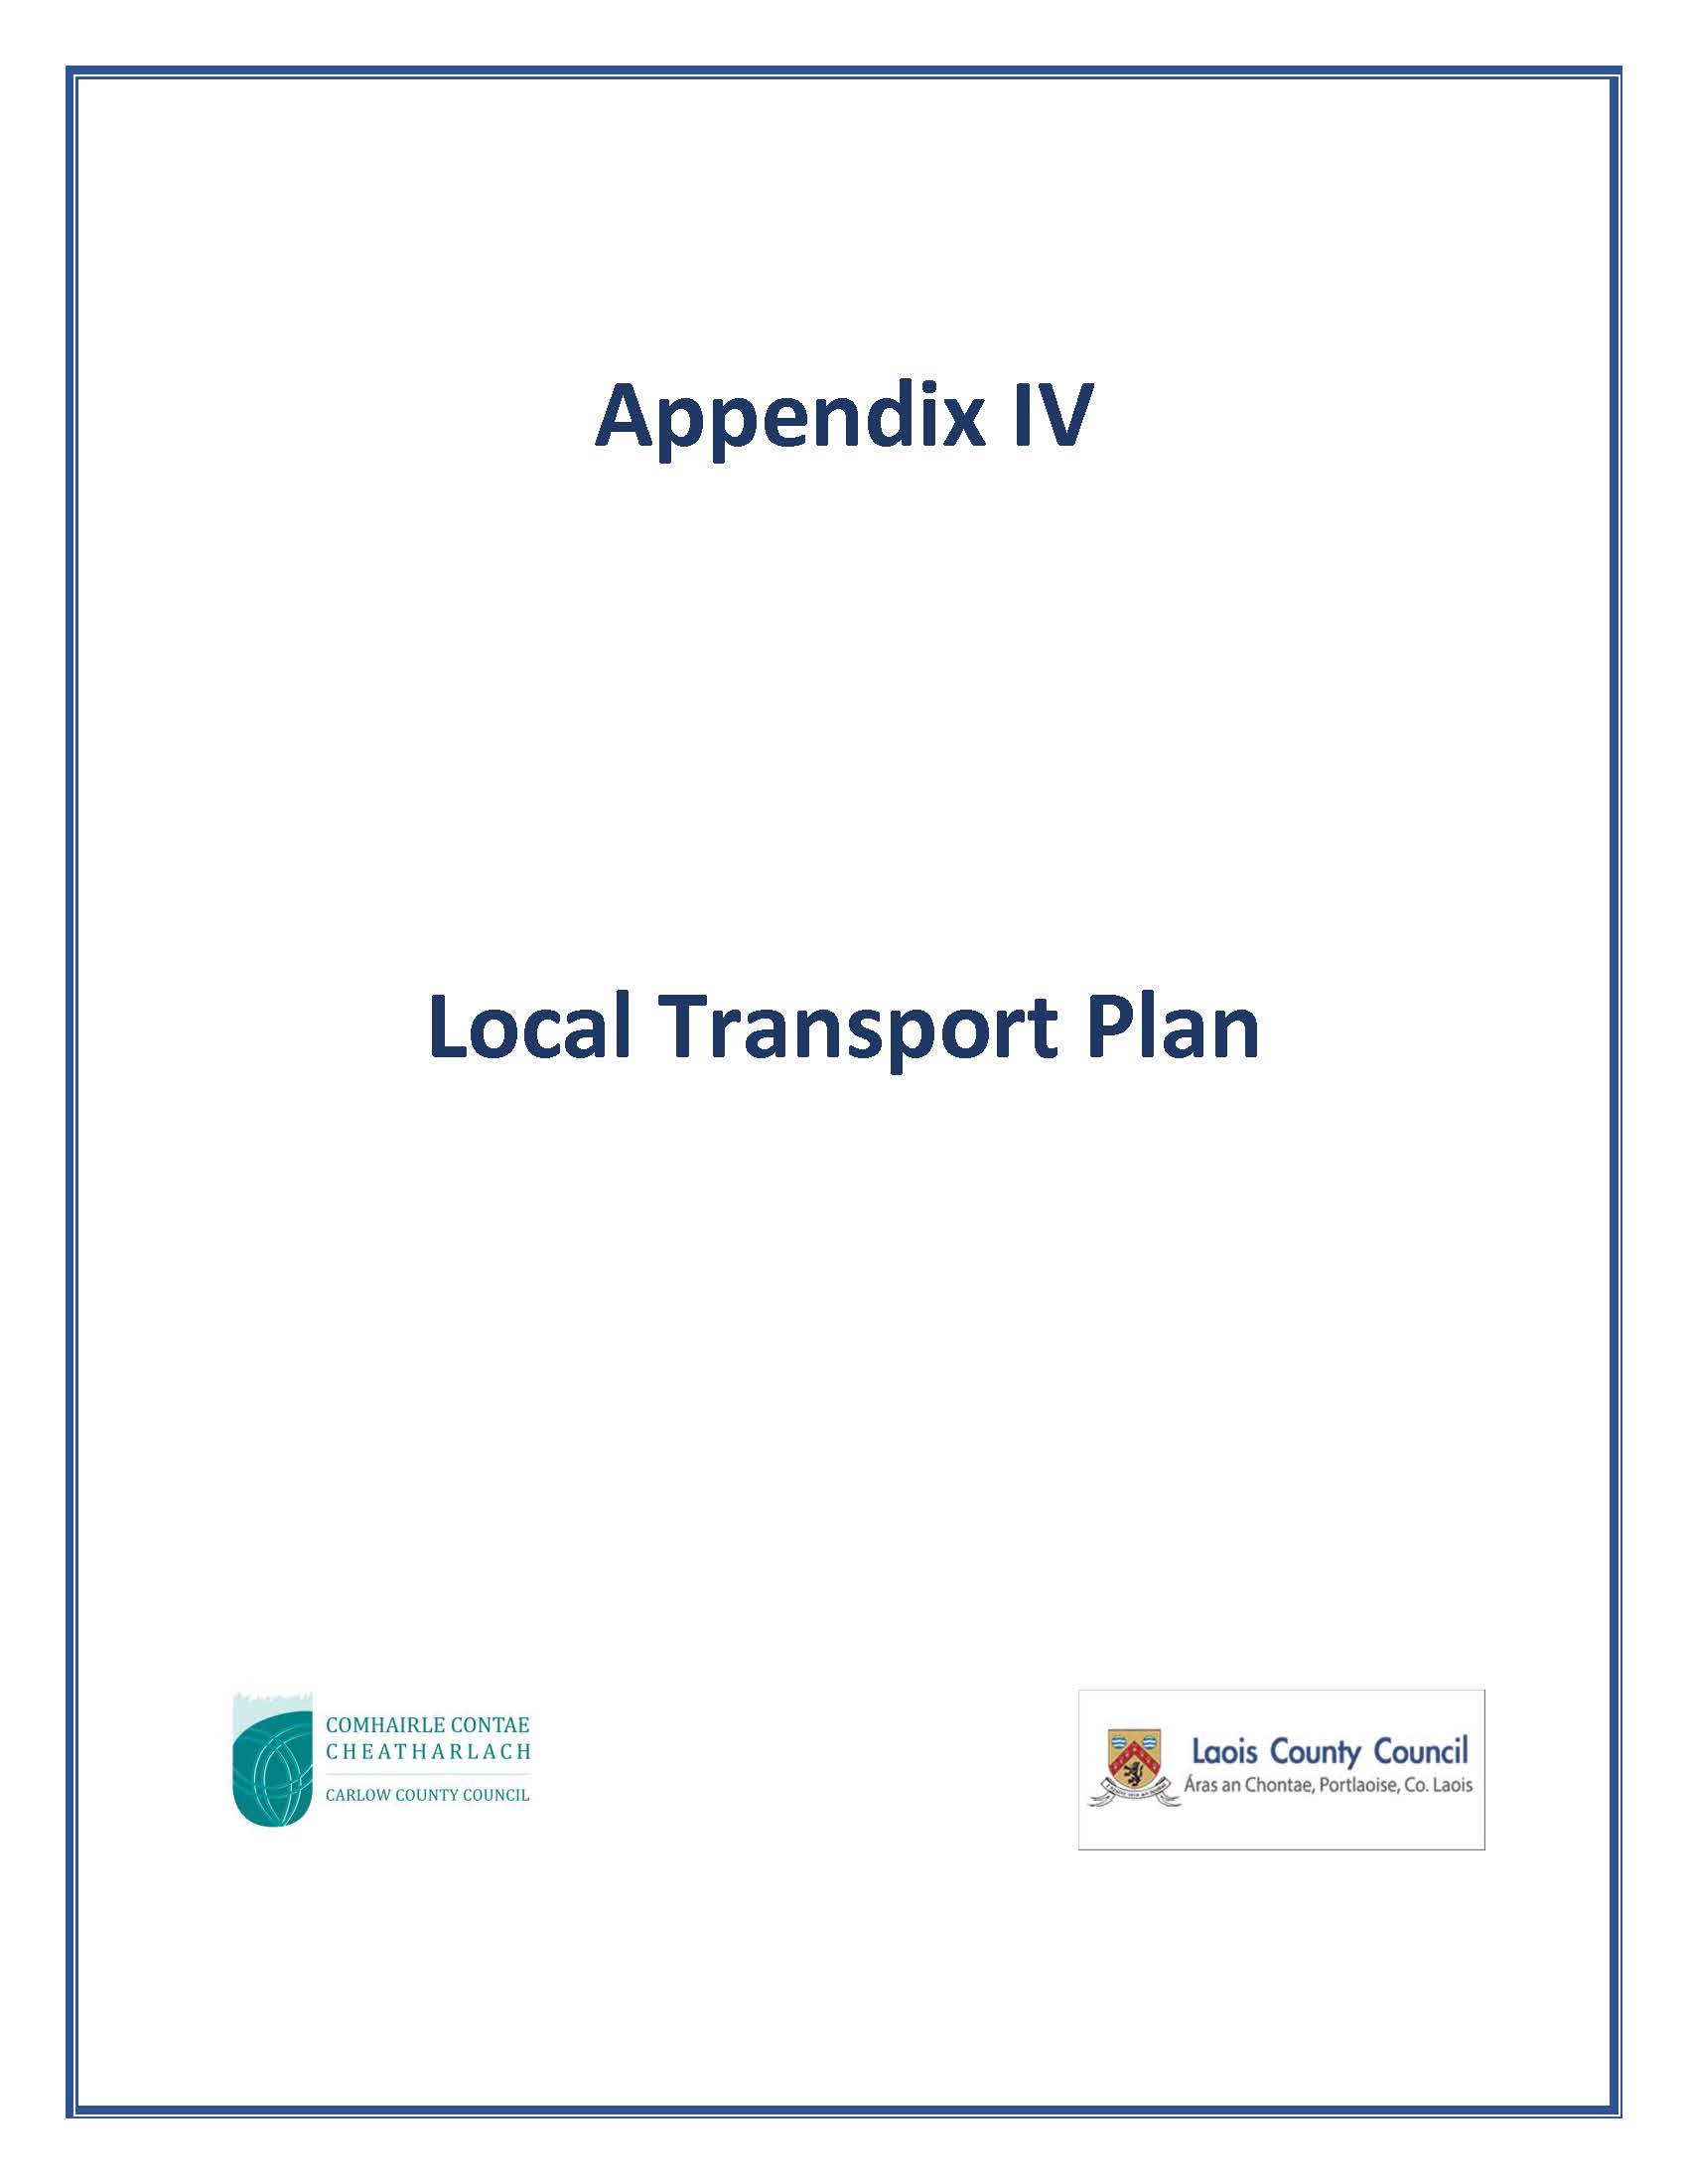 Appendix 4: Local Transport Plan